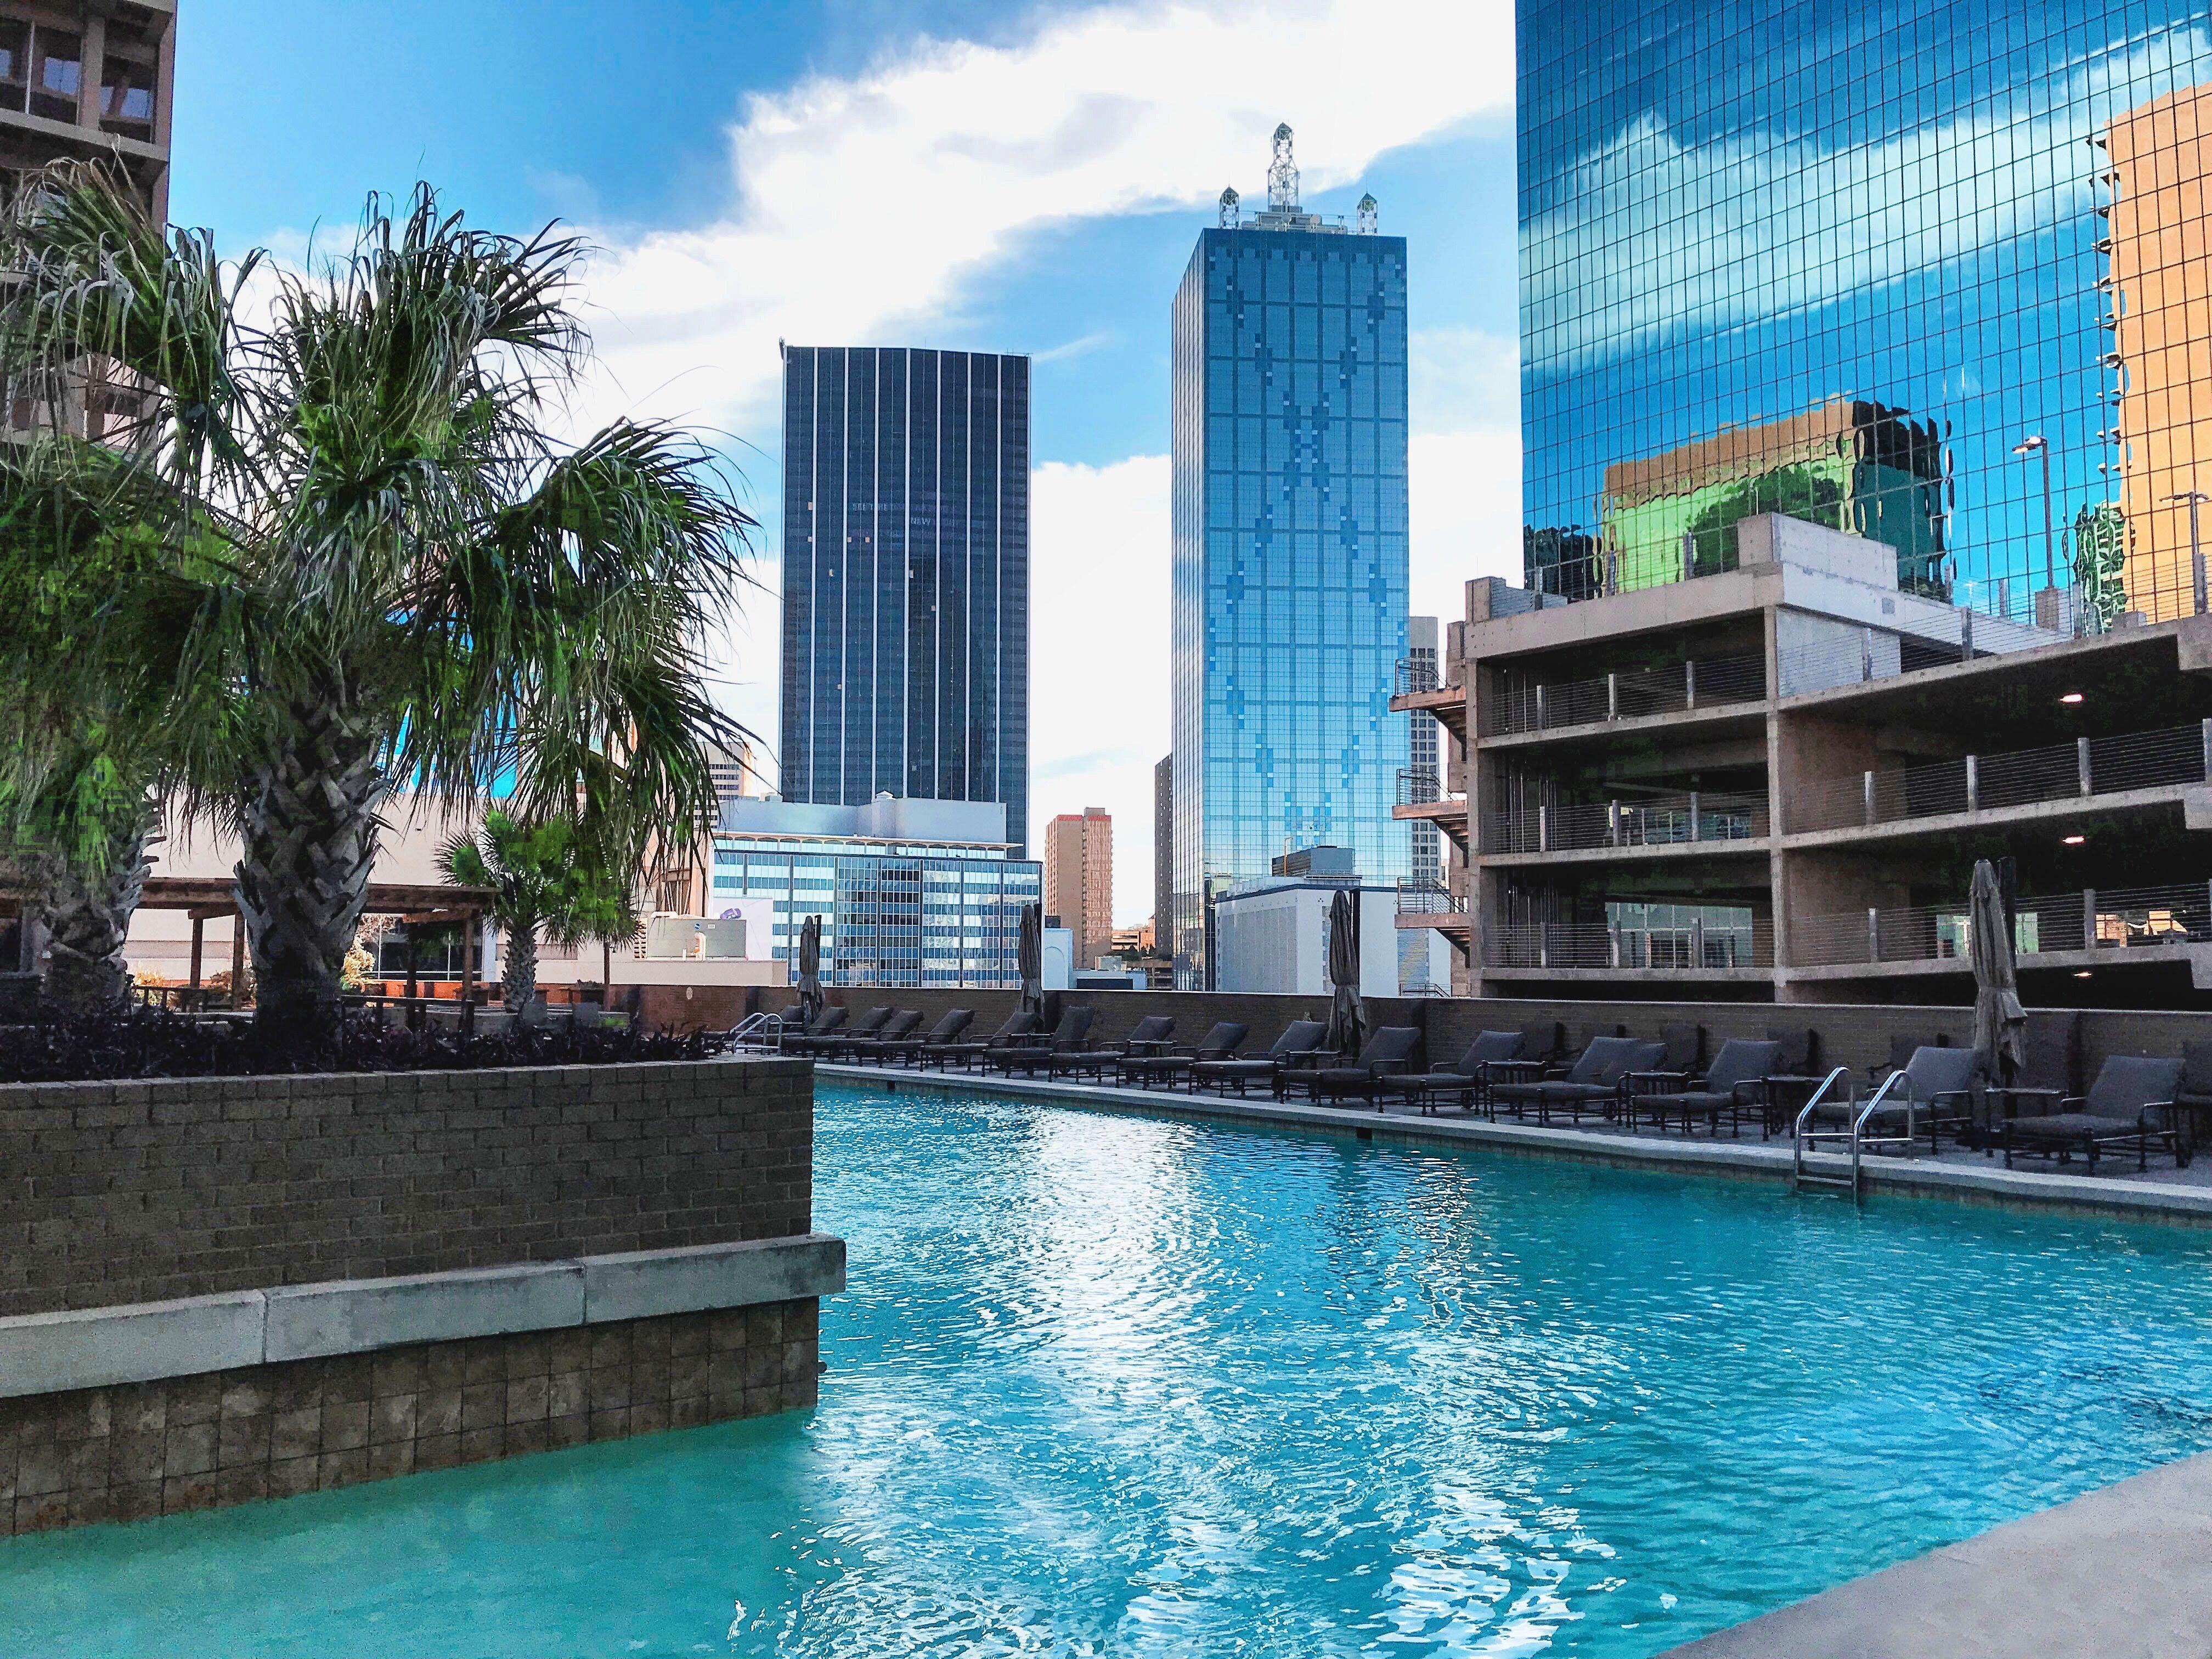 Fairmont Dallas Logo - Where To Stay In Dallas – A Review of The Fairmont Hotel - Hackerette